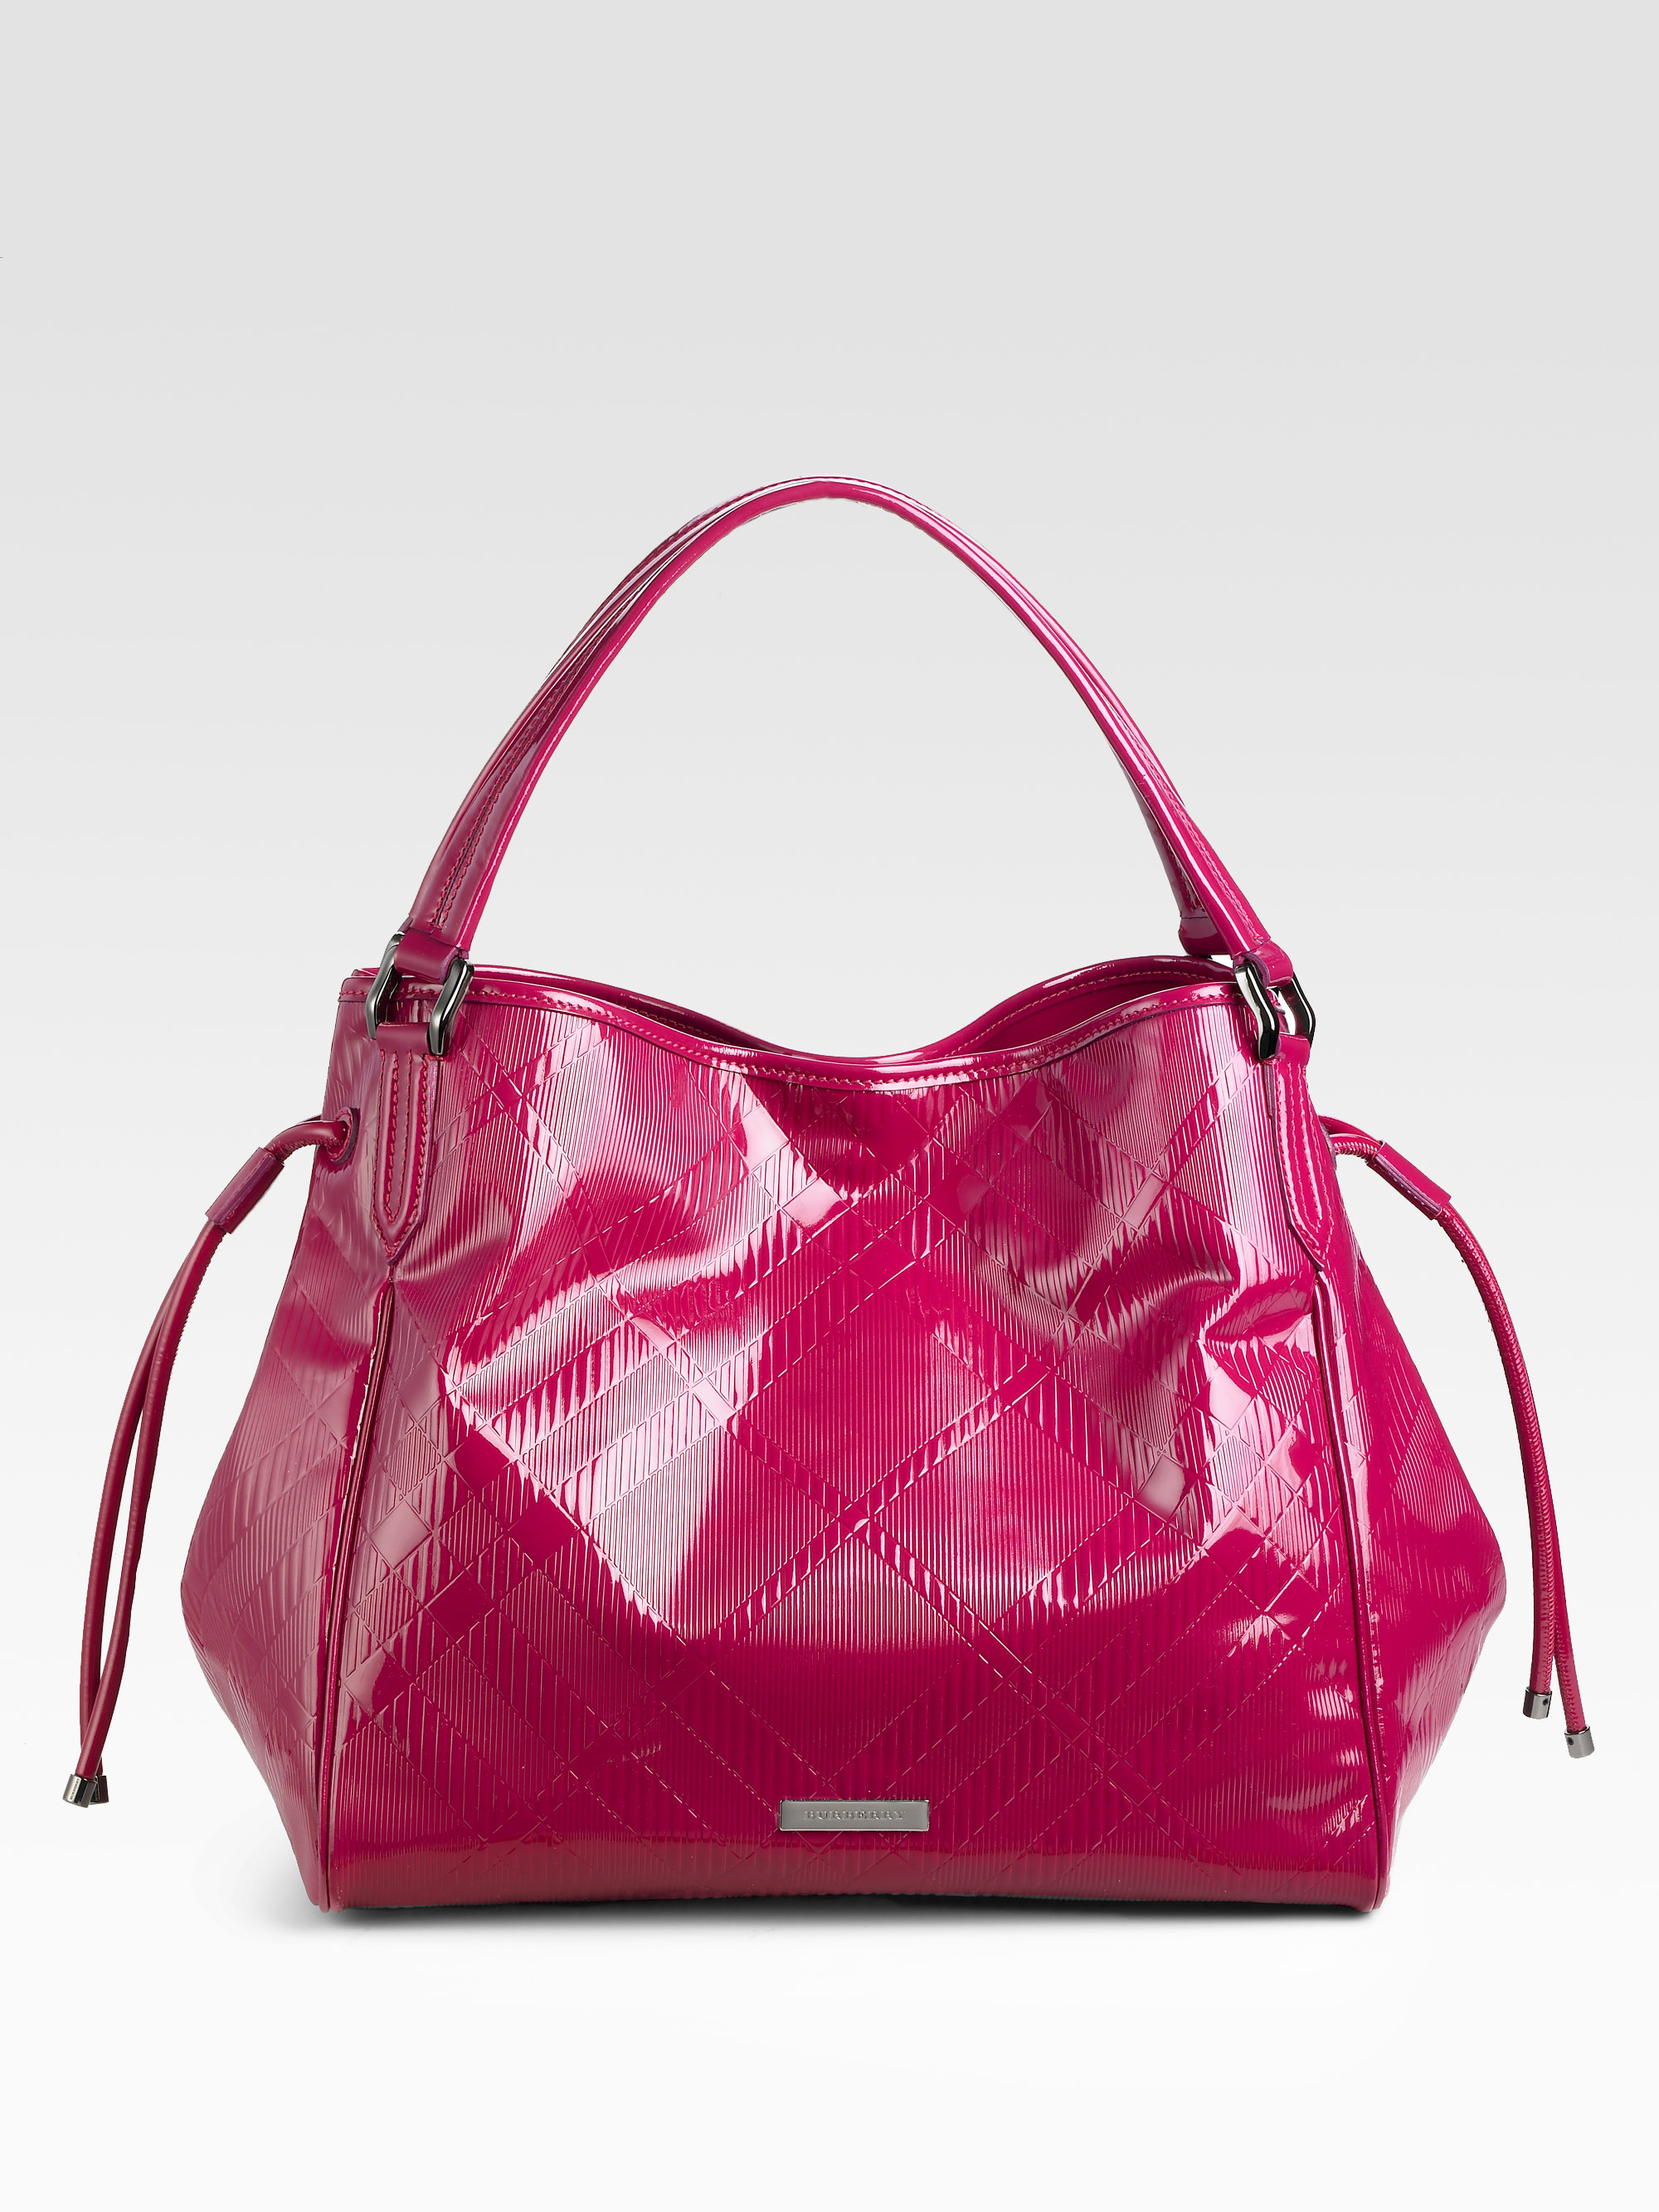 burberry patent leather handbag